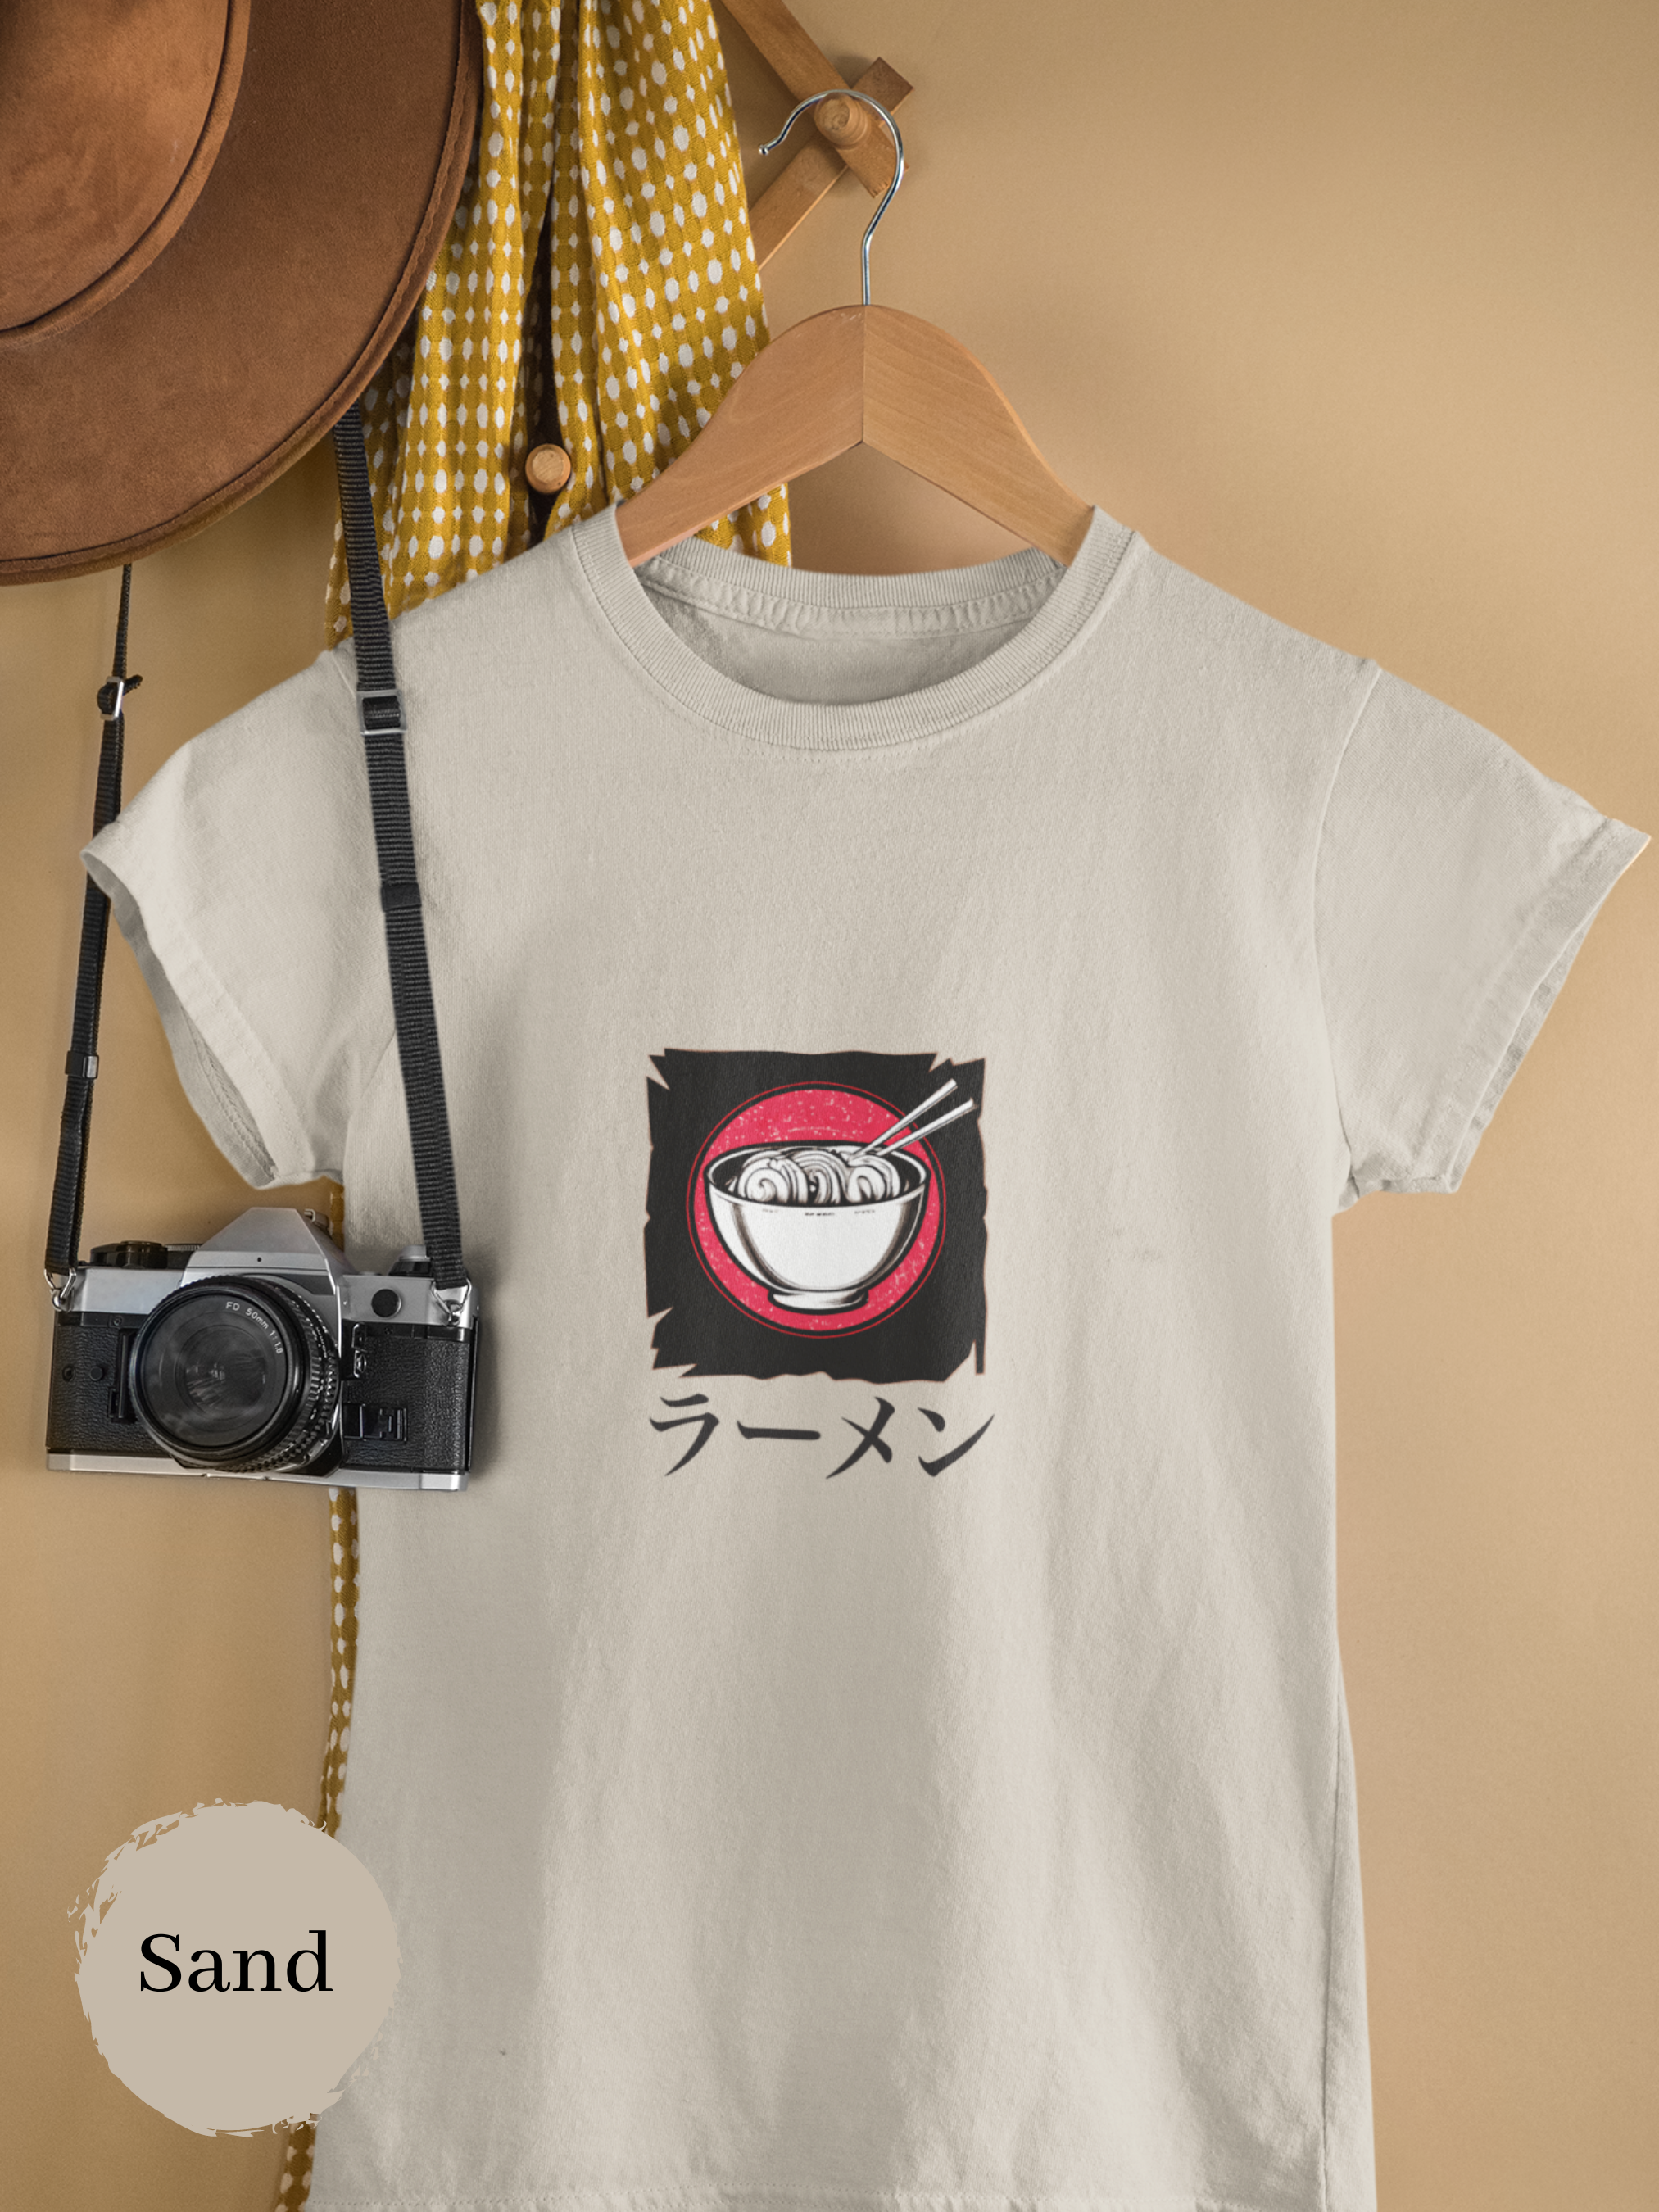 Ramen T-Shirt with Japanese Ramen Bowl Illustration - Foodie Shirt for Ramen Art Enthusiasts